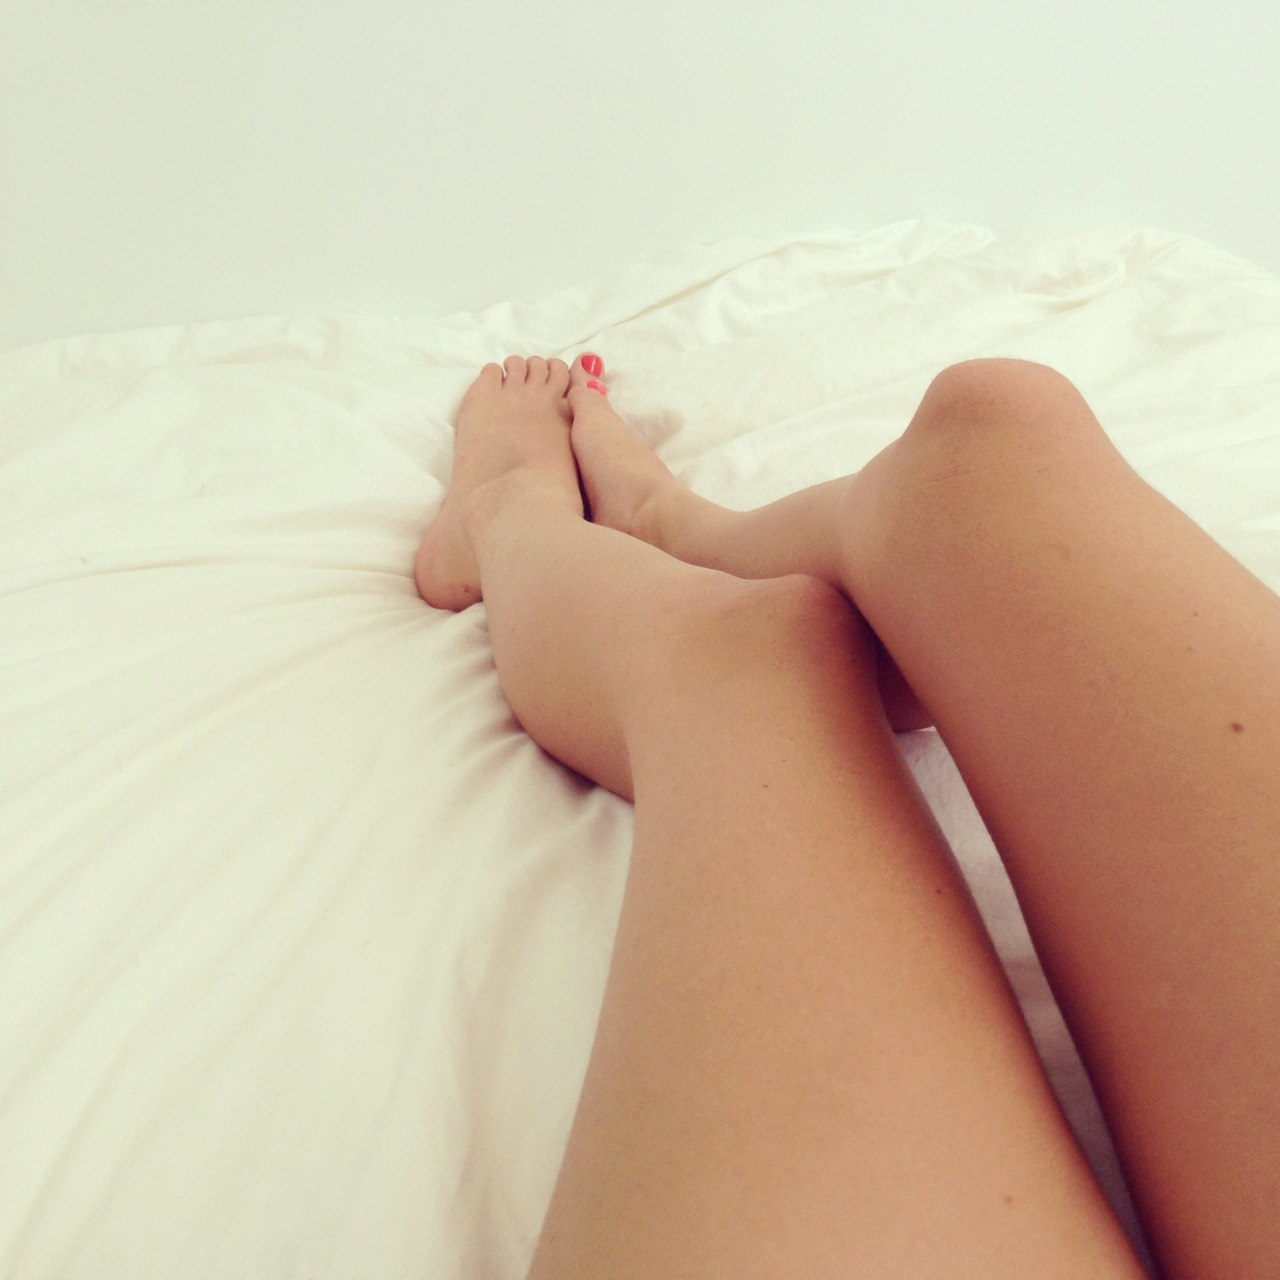 ноги фото девушек в кровати домашних